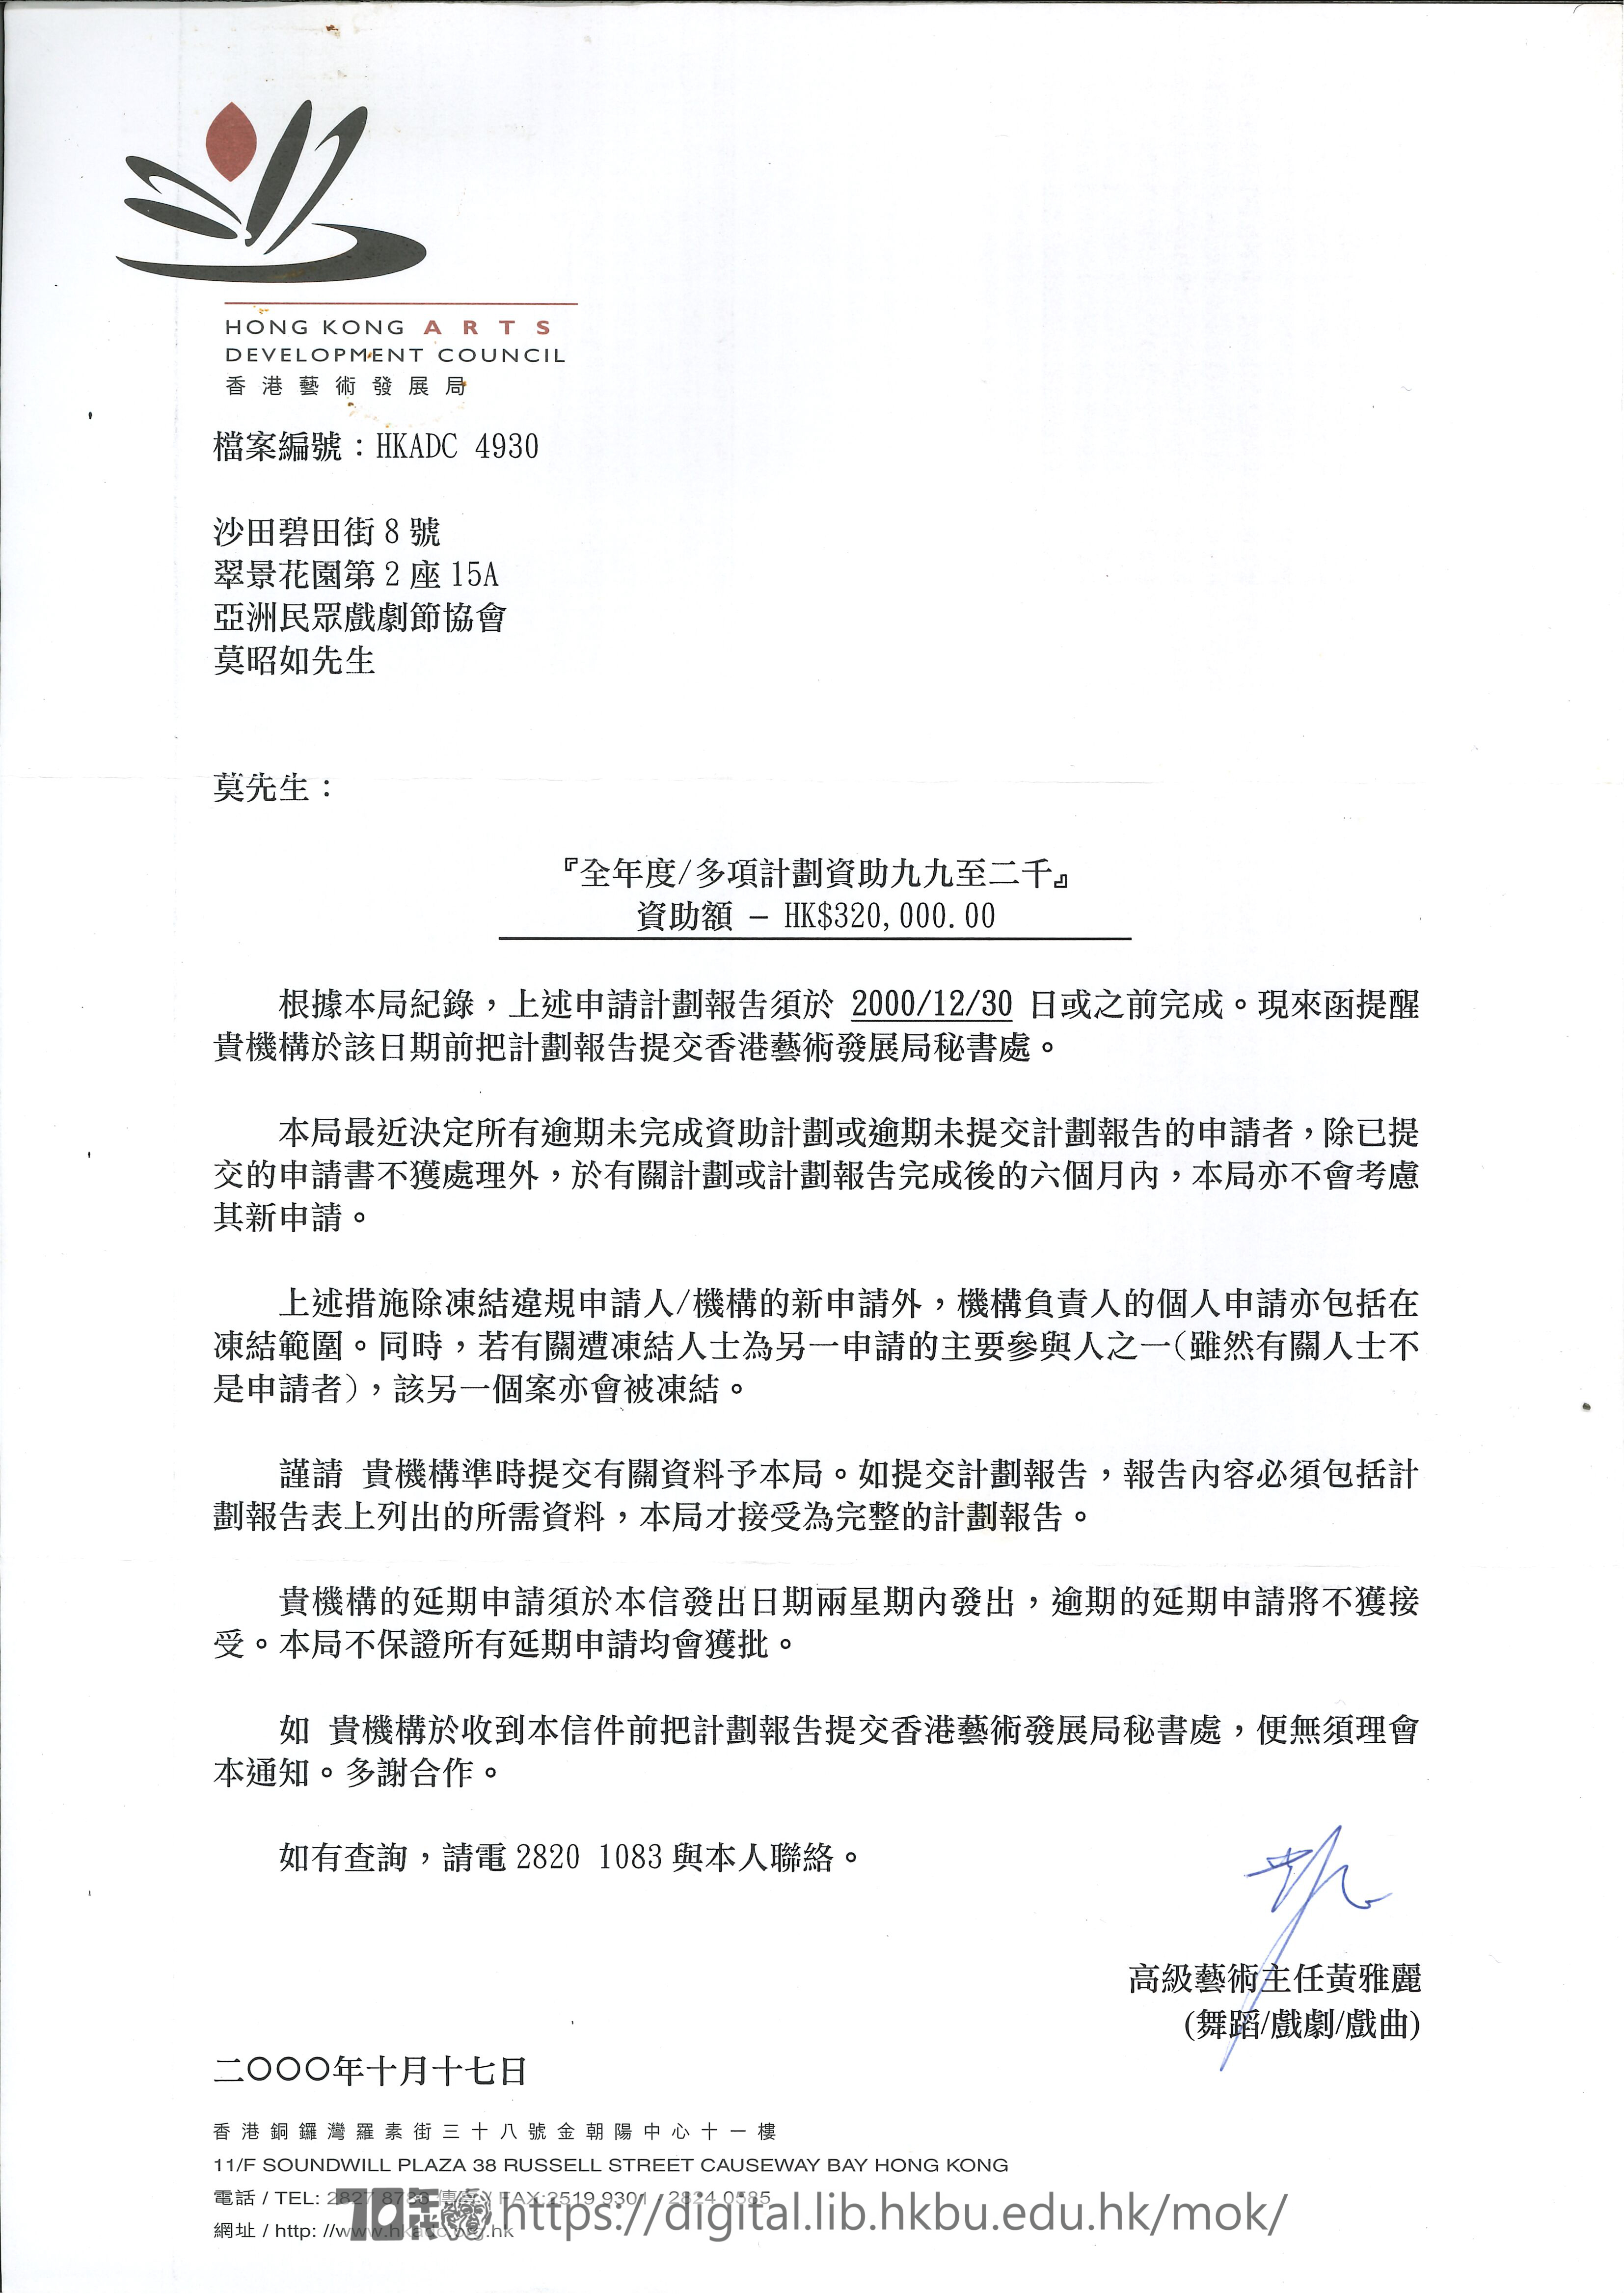   Letter from Hong Kong Arts Development Council regarding multiple project grant 1999-2000  